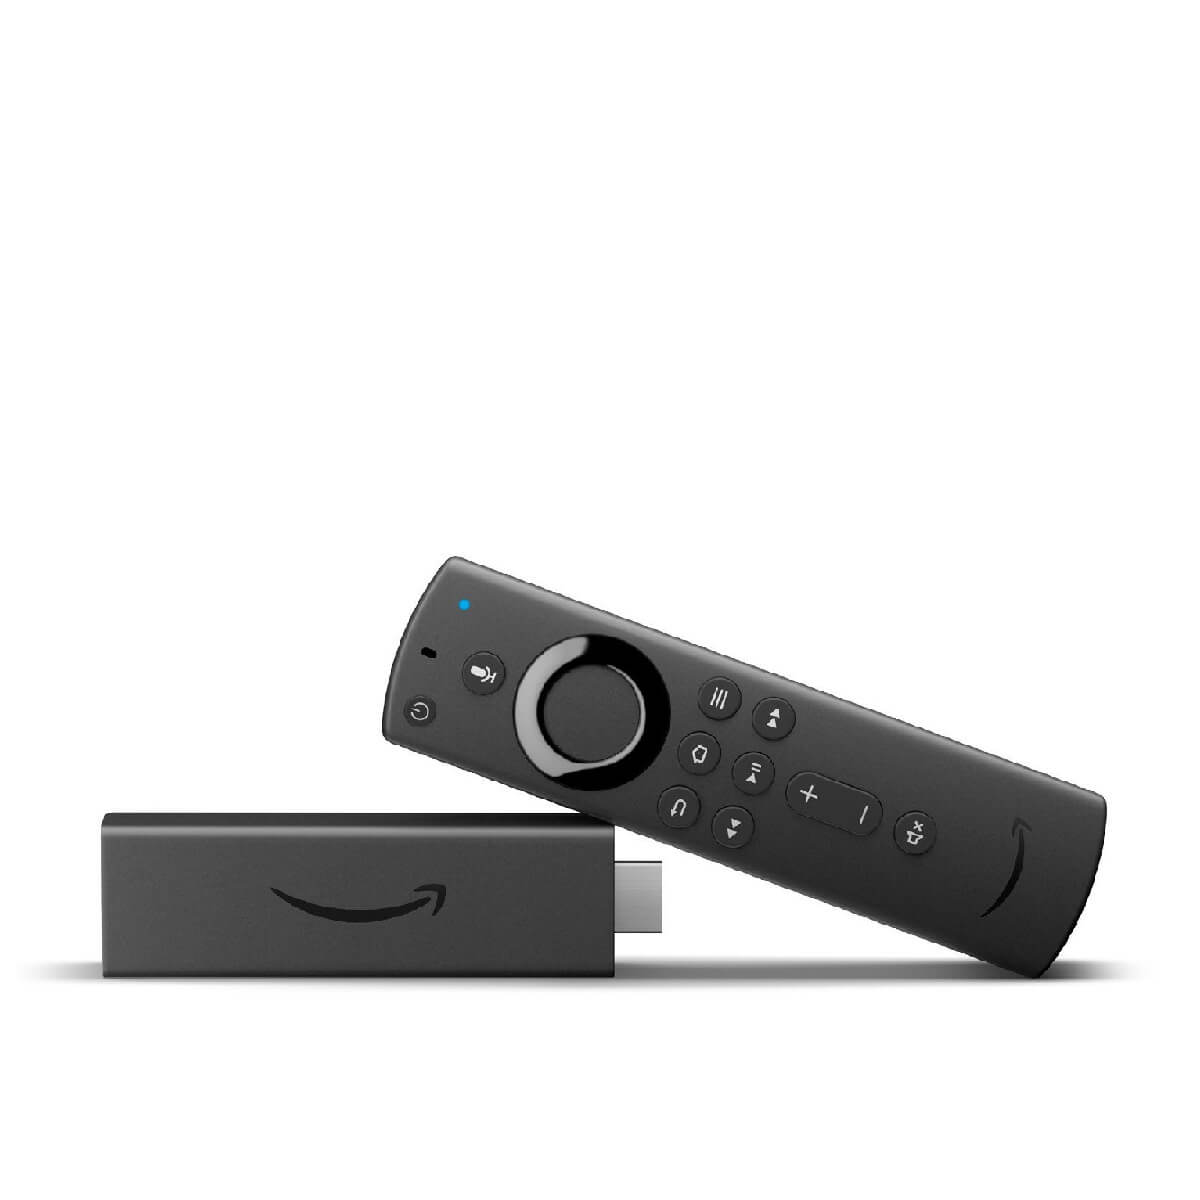 el Amazon fire tv stick se conecta al altavoz bluetooth